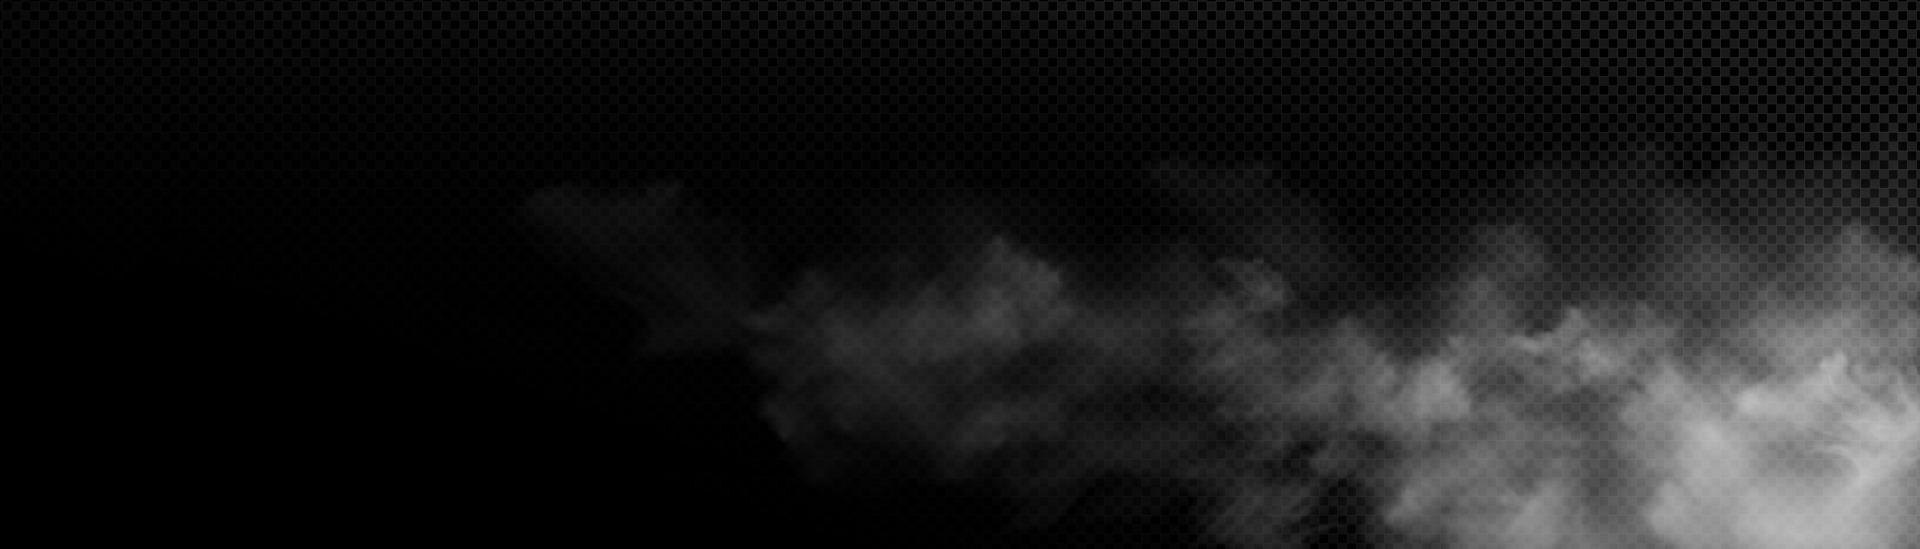 realistisk rök, vit moln på svart bakgrund vektor